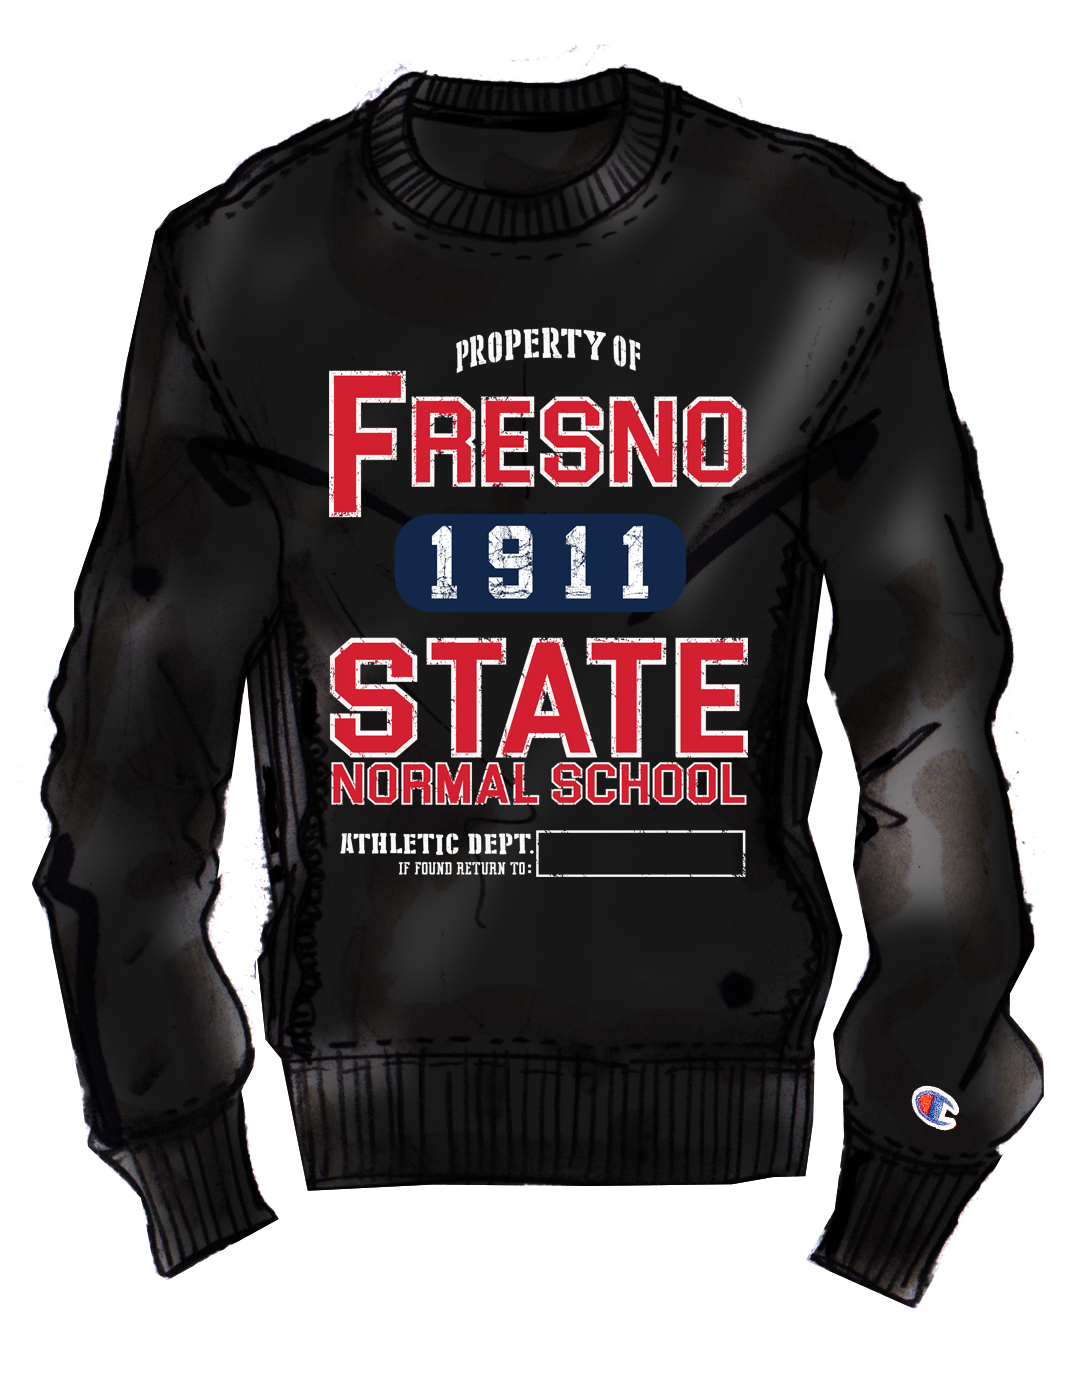 BCU X Champion Sweatshirt - Fresno State